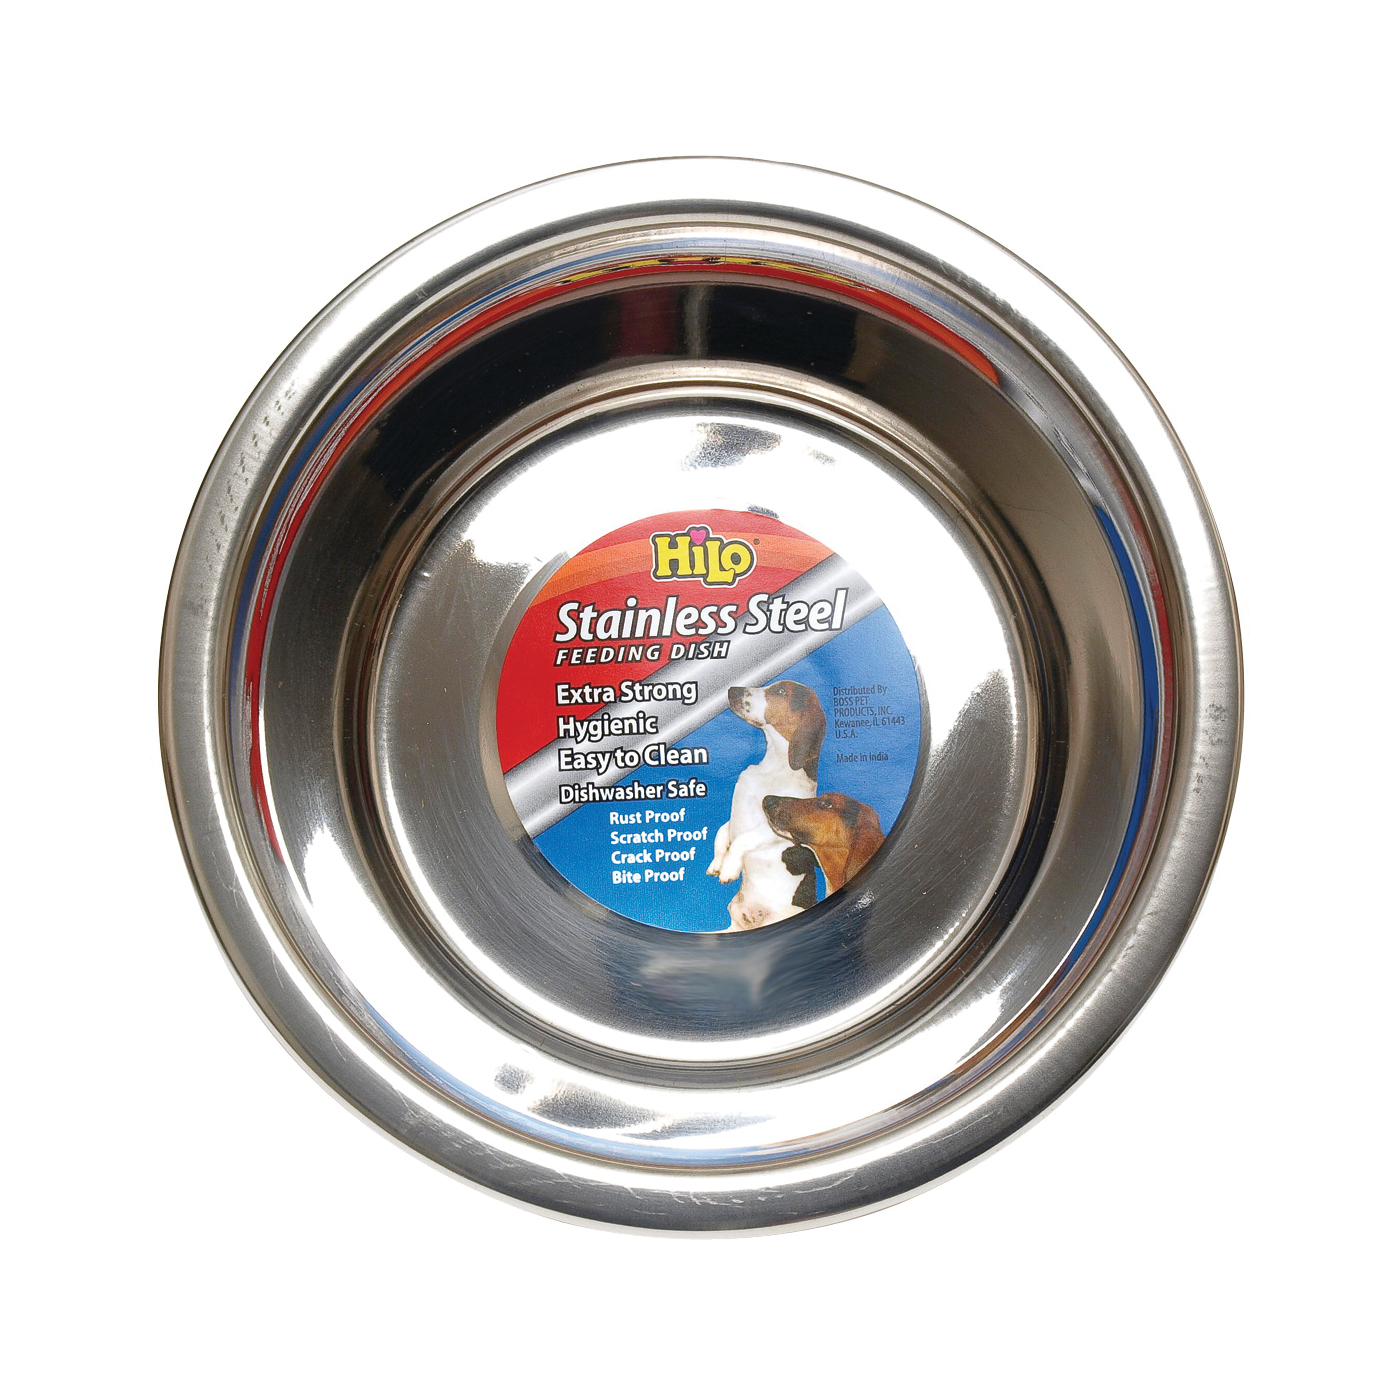 ZW150 64/56620 Pet Feeding Dish, M, 2 qt Volume, Stainless Steel